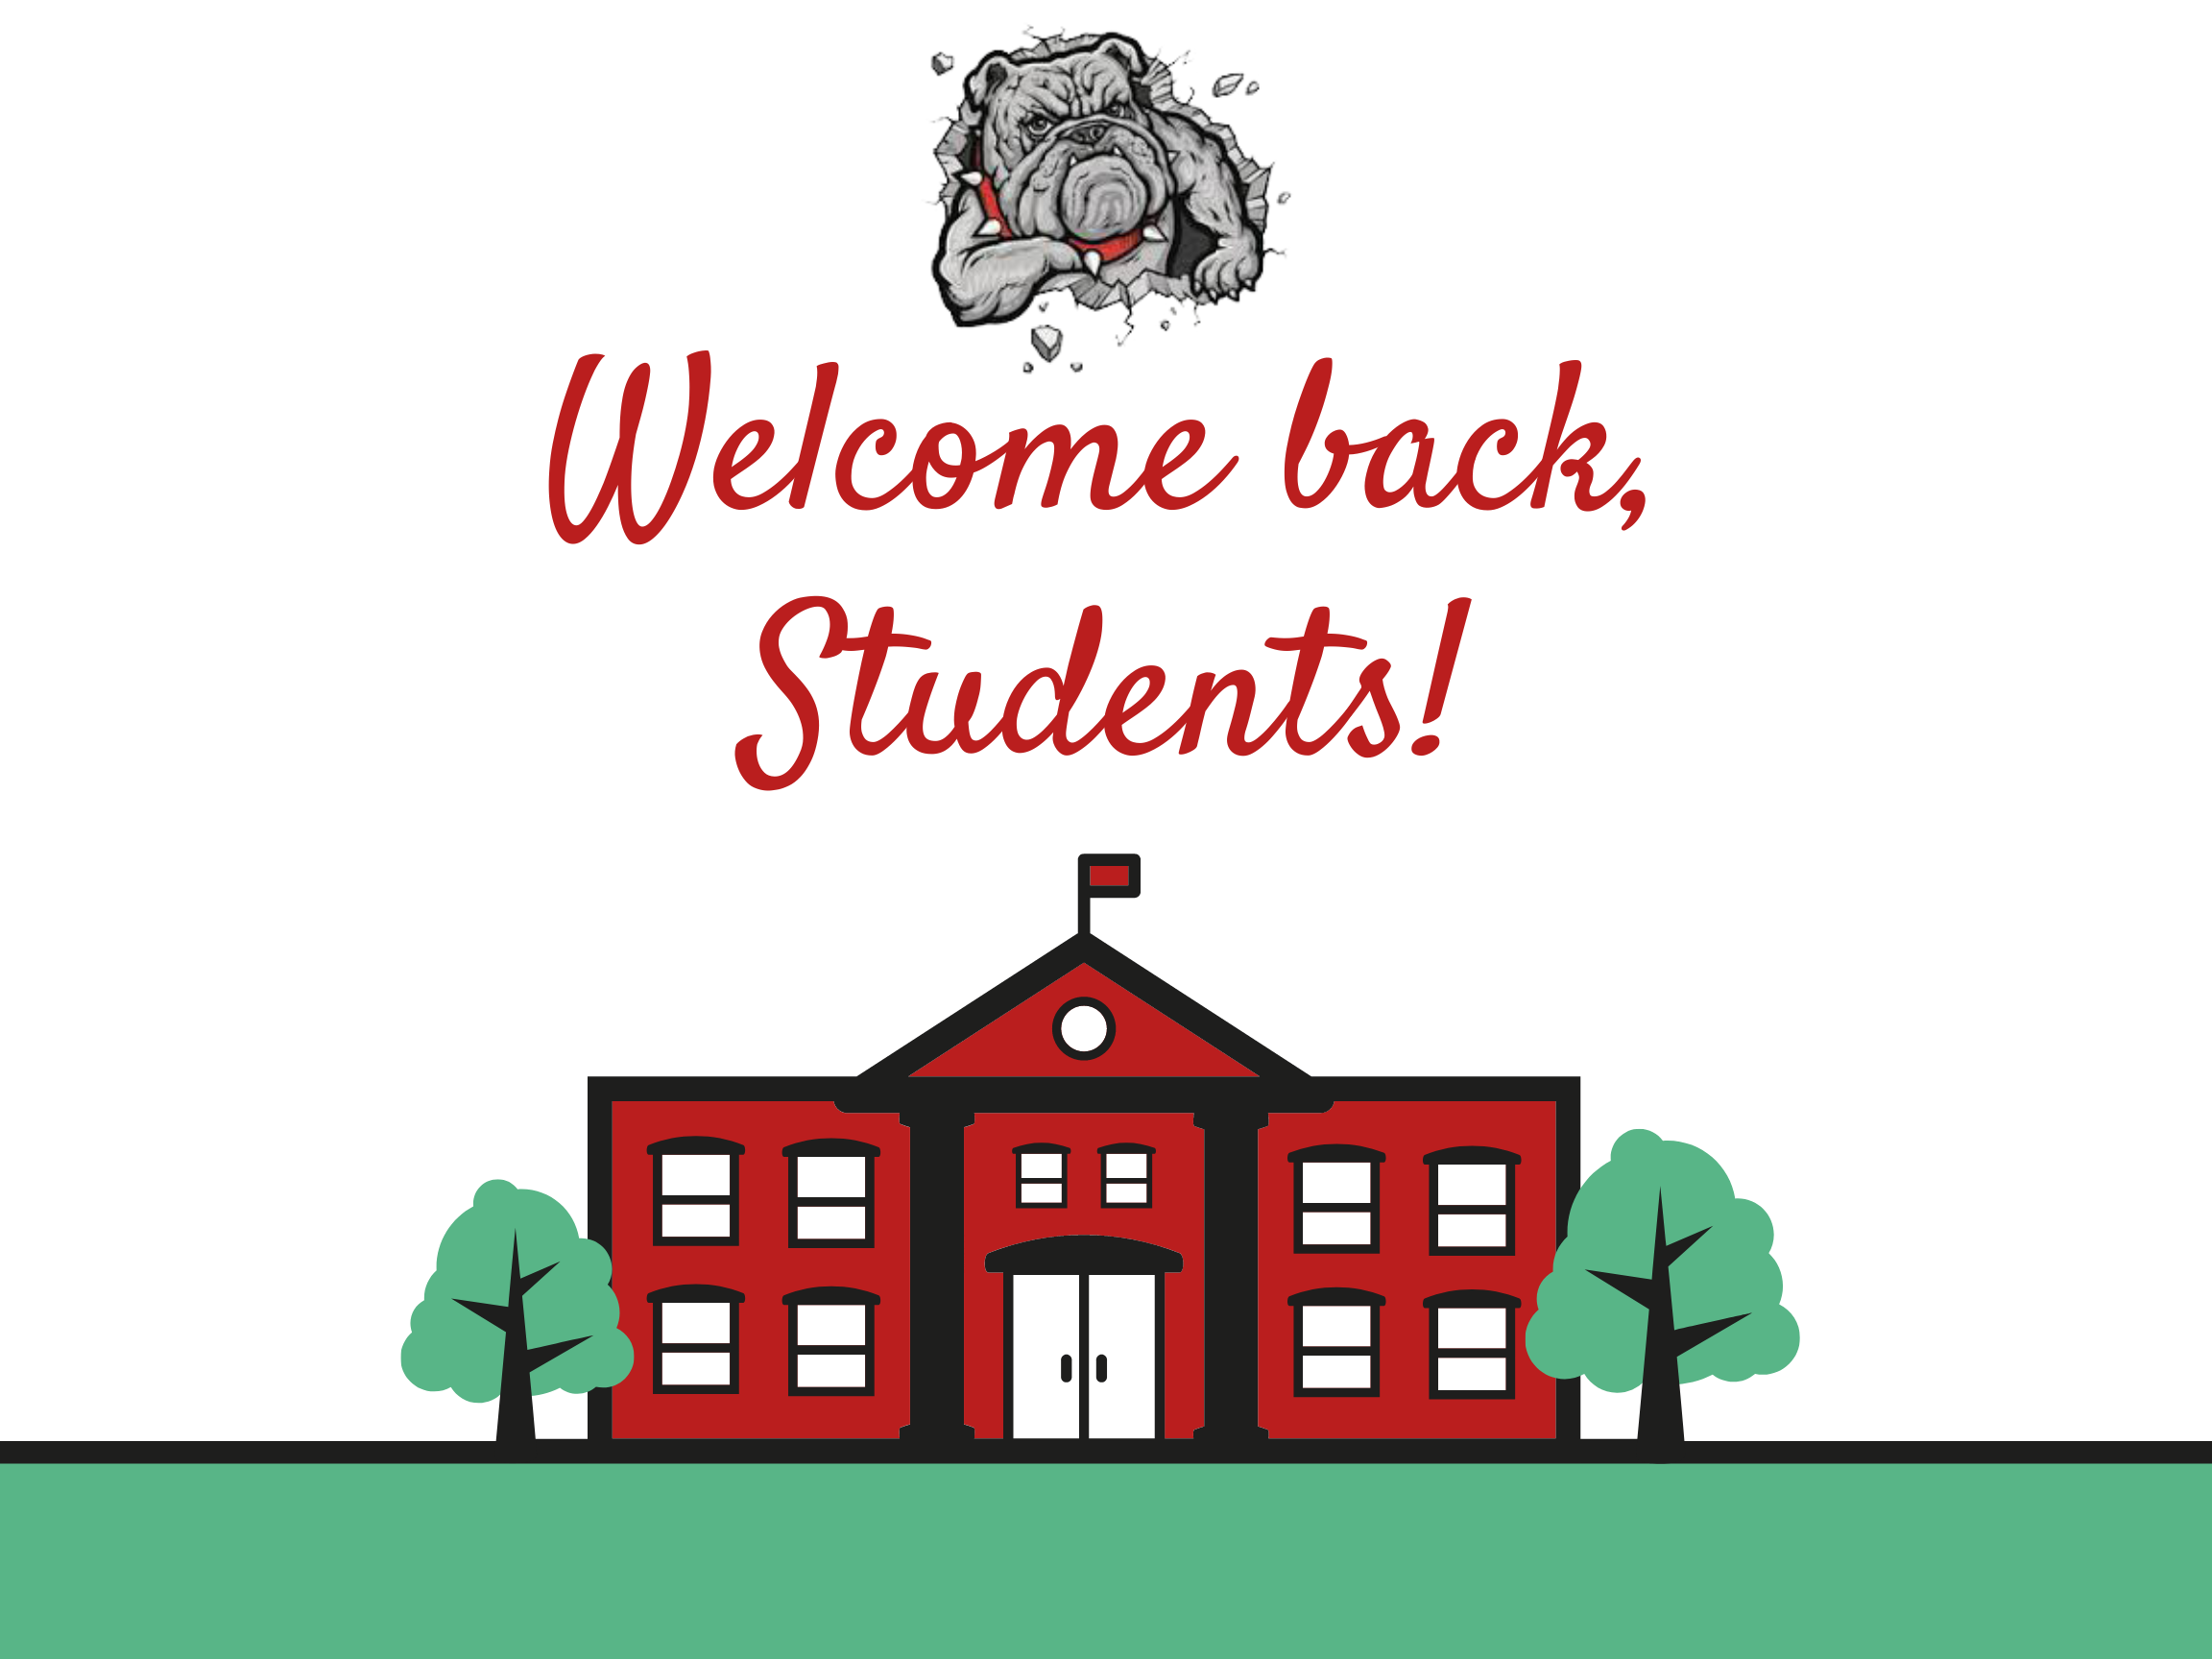 welcome back students - cartoon school house with bulldog logo